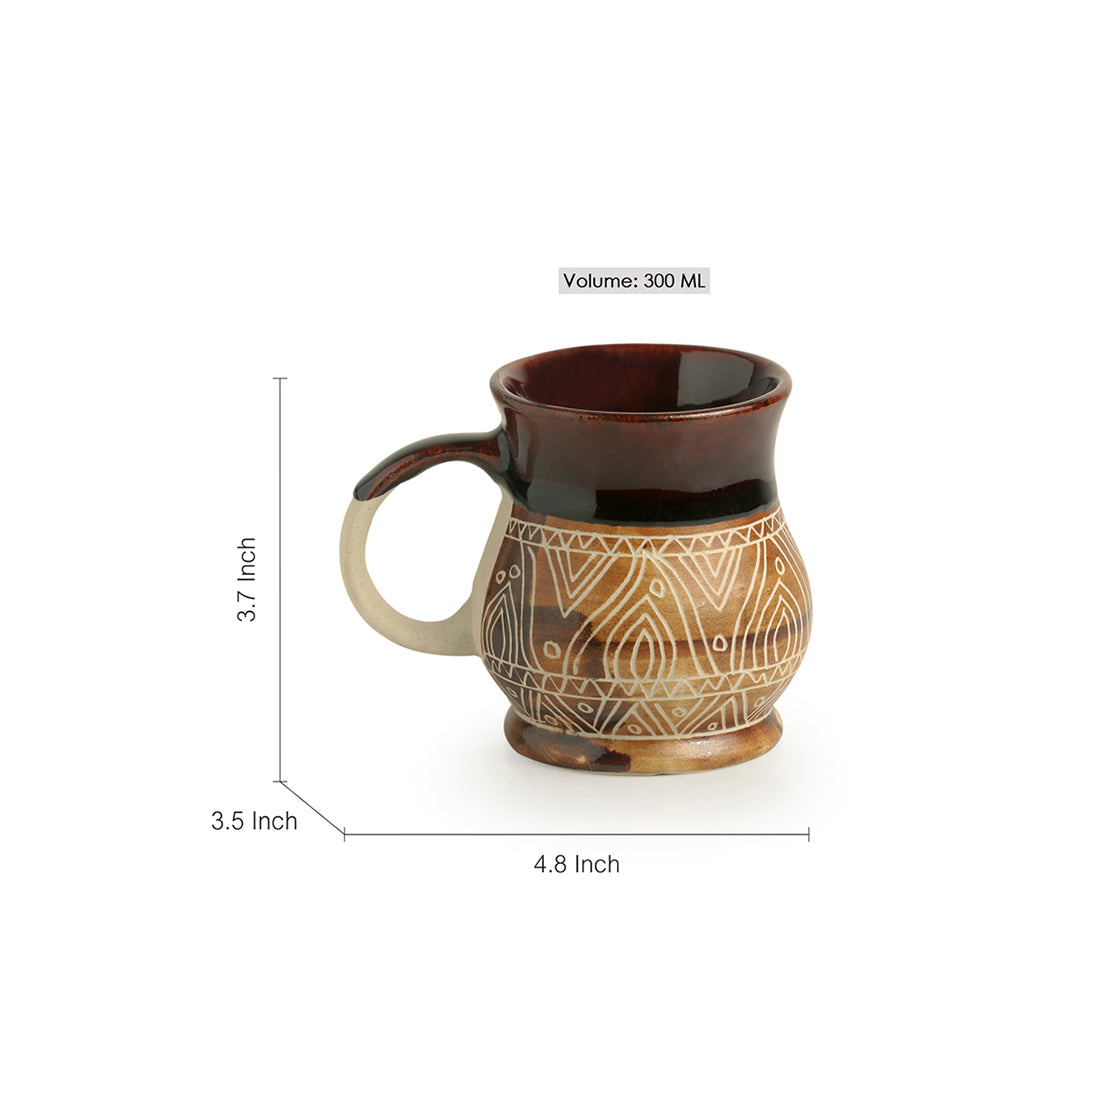 'Cocoa & Fire Carvings' Studio Pottery Tea & Coffee Mug In Ceramic (300 ML, Microwave Safe)